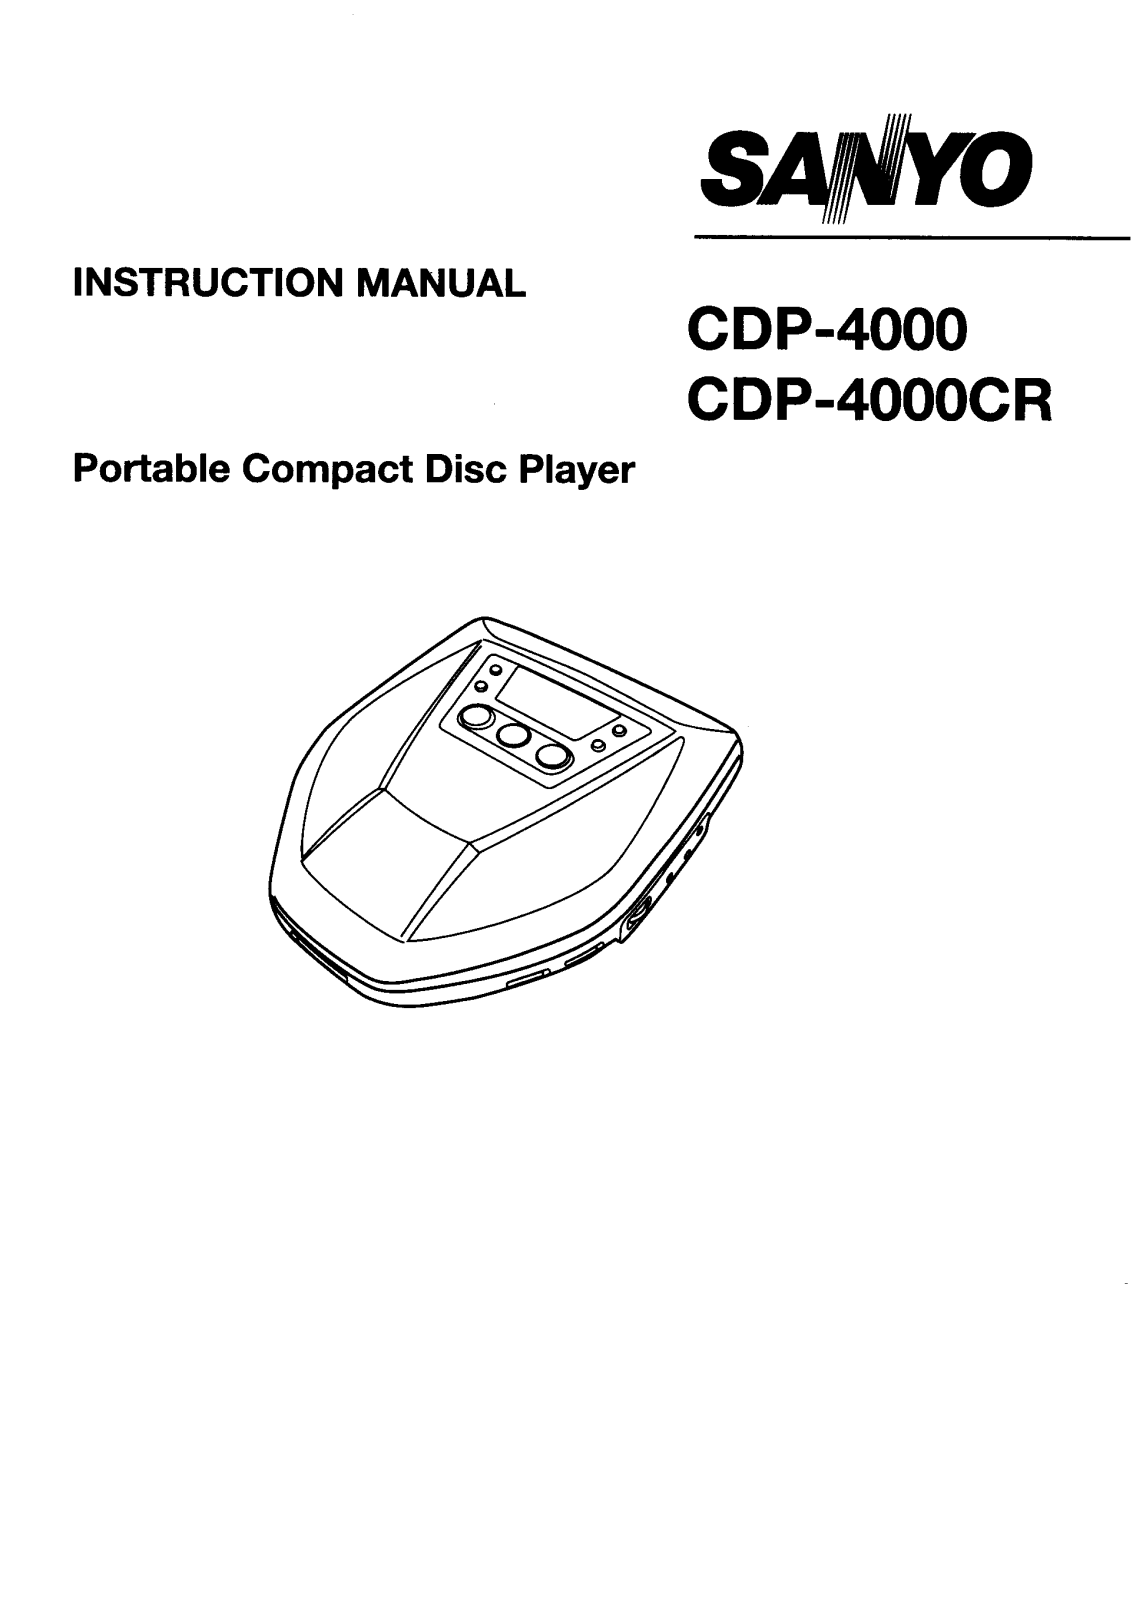 Sanyo CDP-4000, CDP-4000CR Instruction Manual